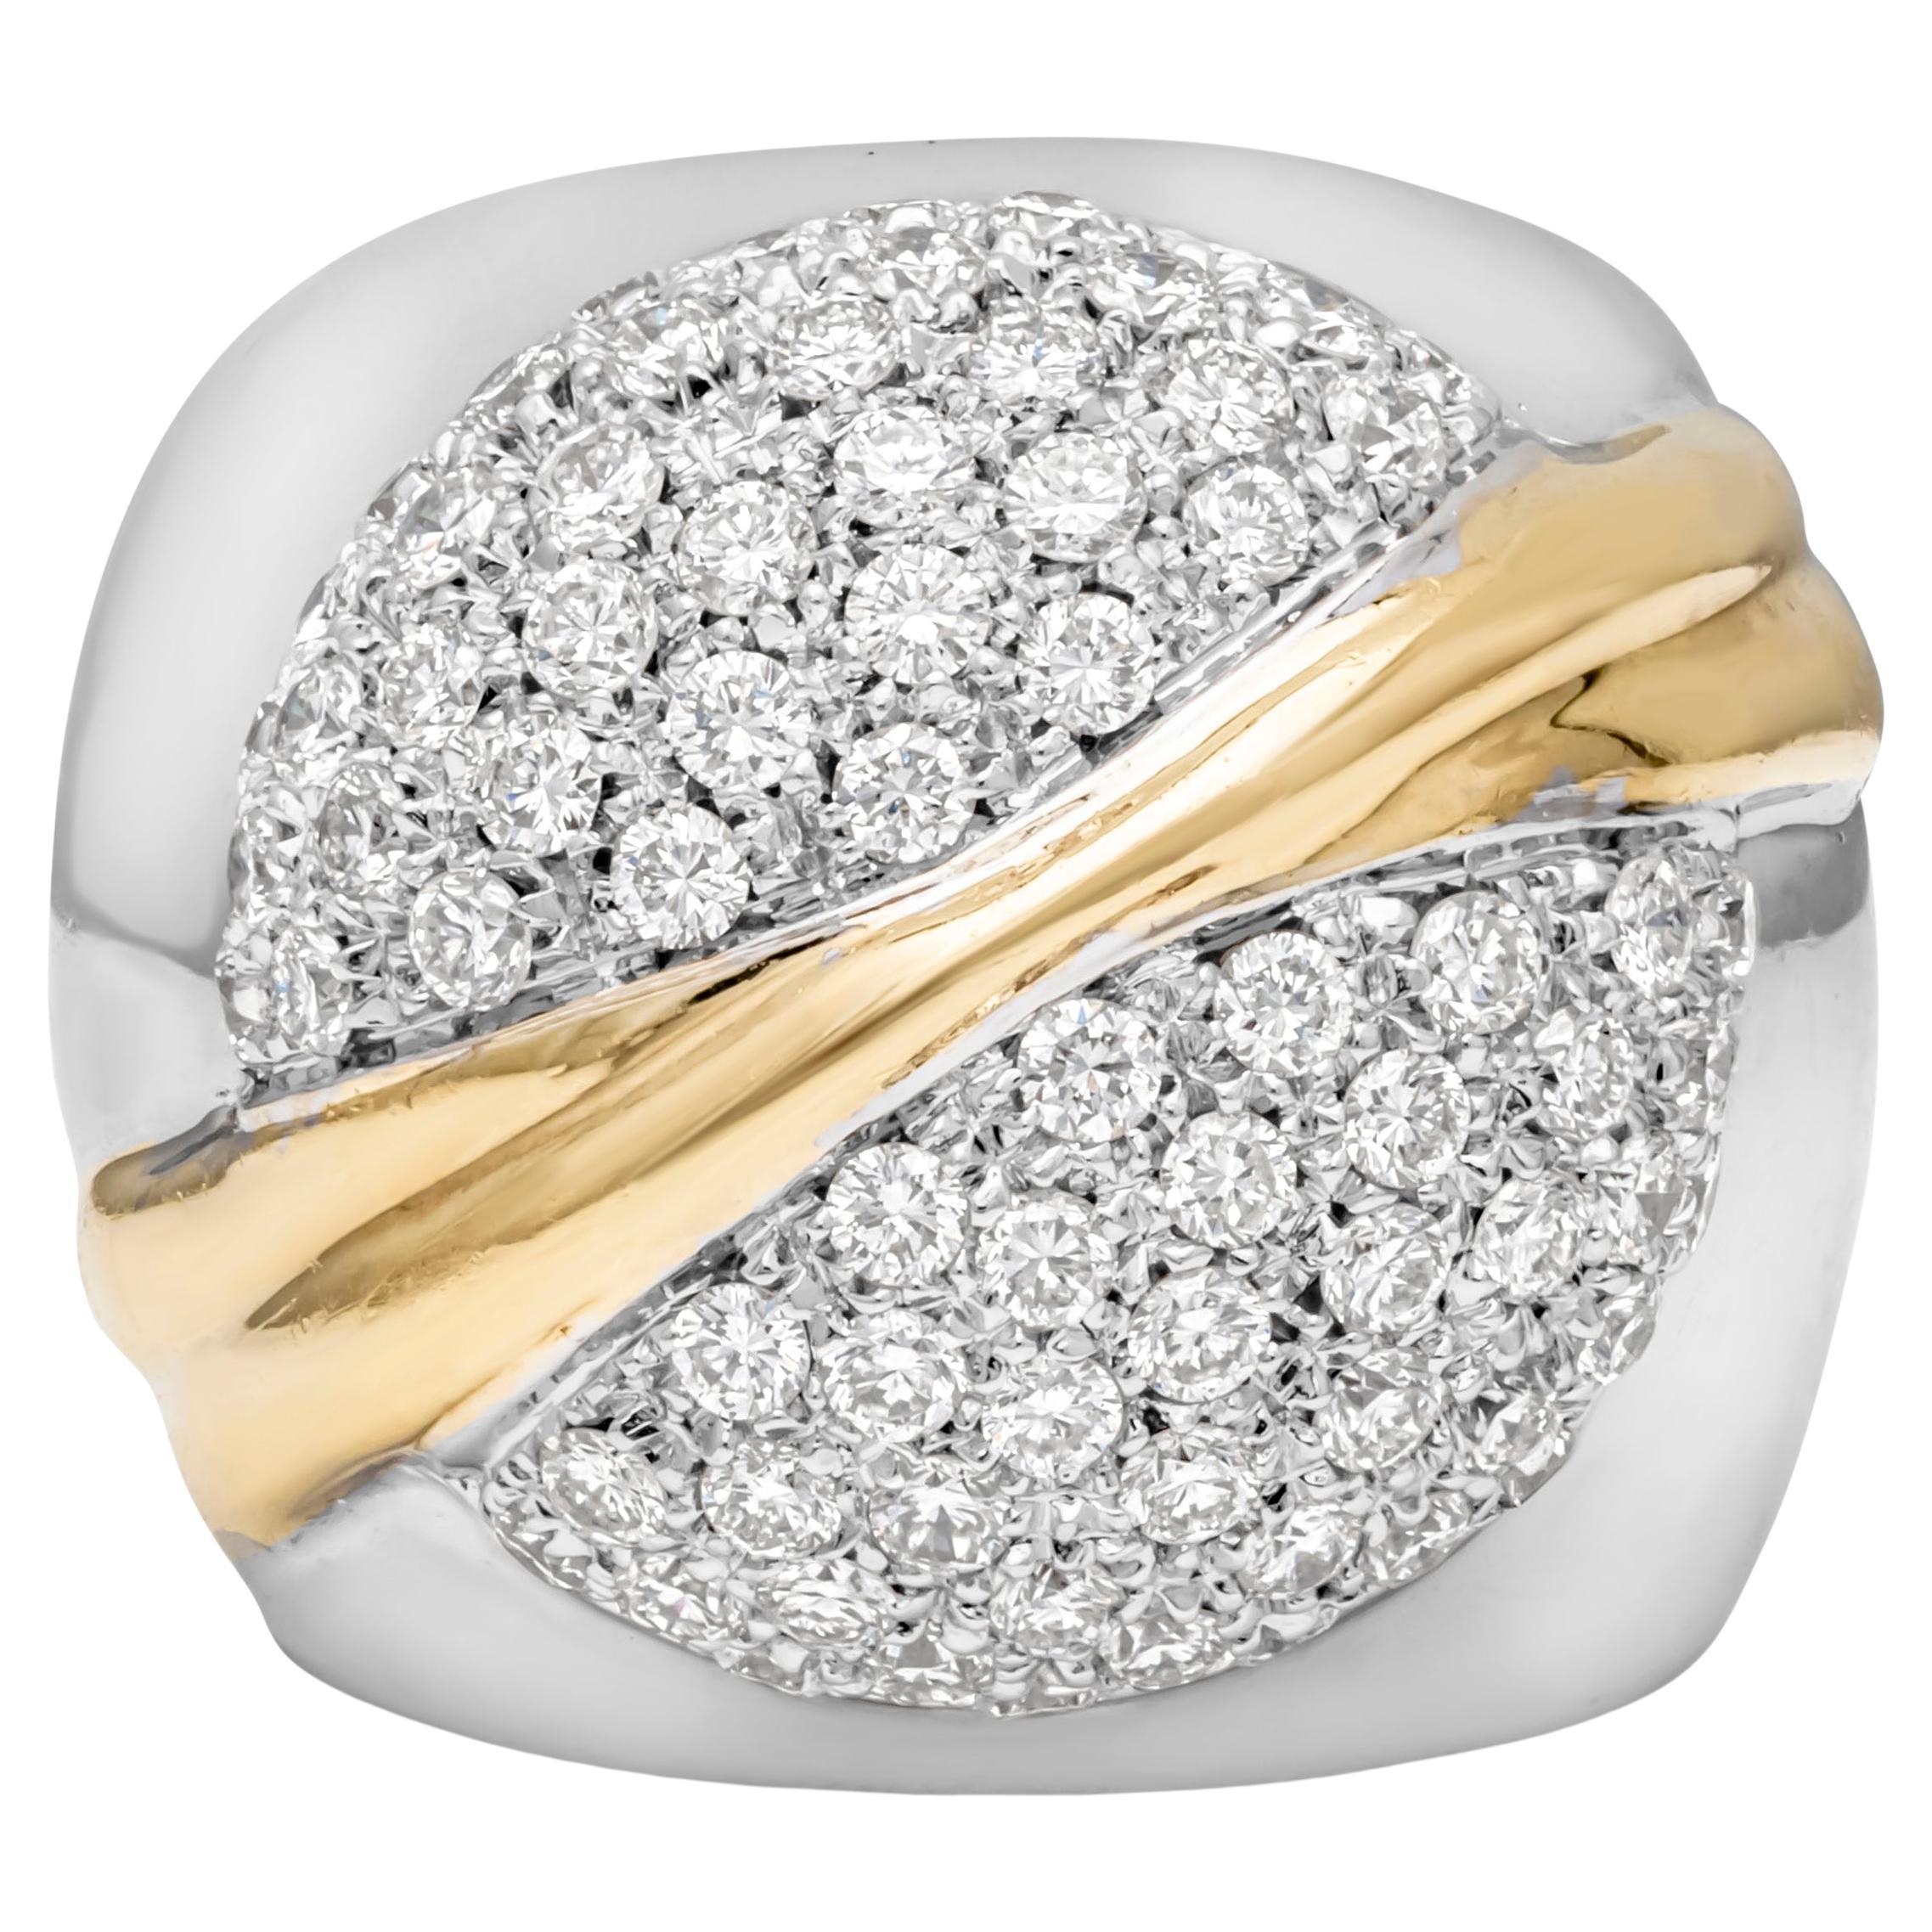 Roman Malakov 3.06 Carats Total Brilliant Round Cut Diamond Wide Fashion Ring For Sale